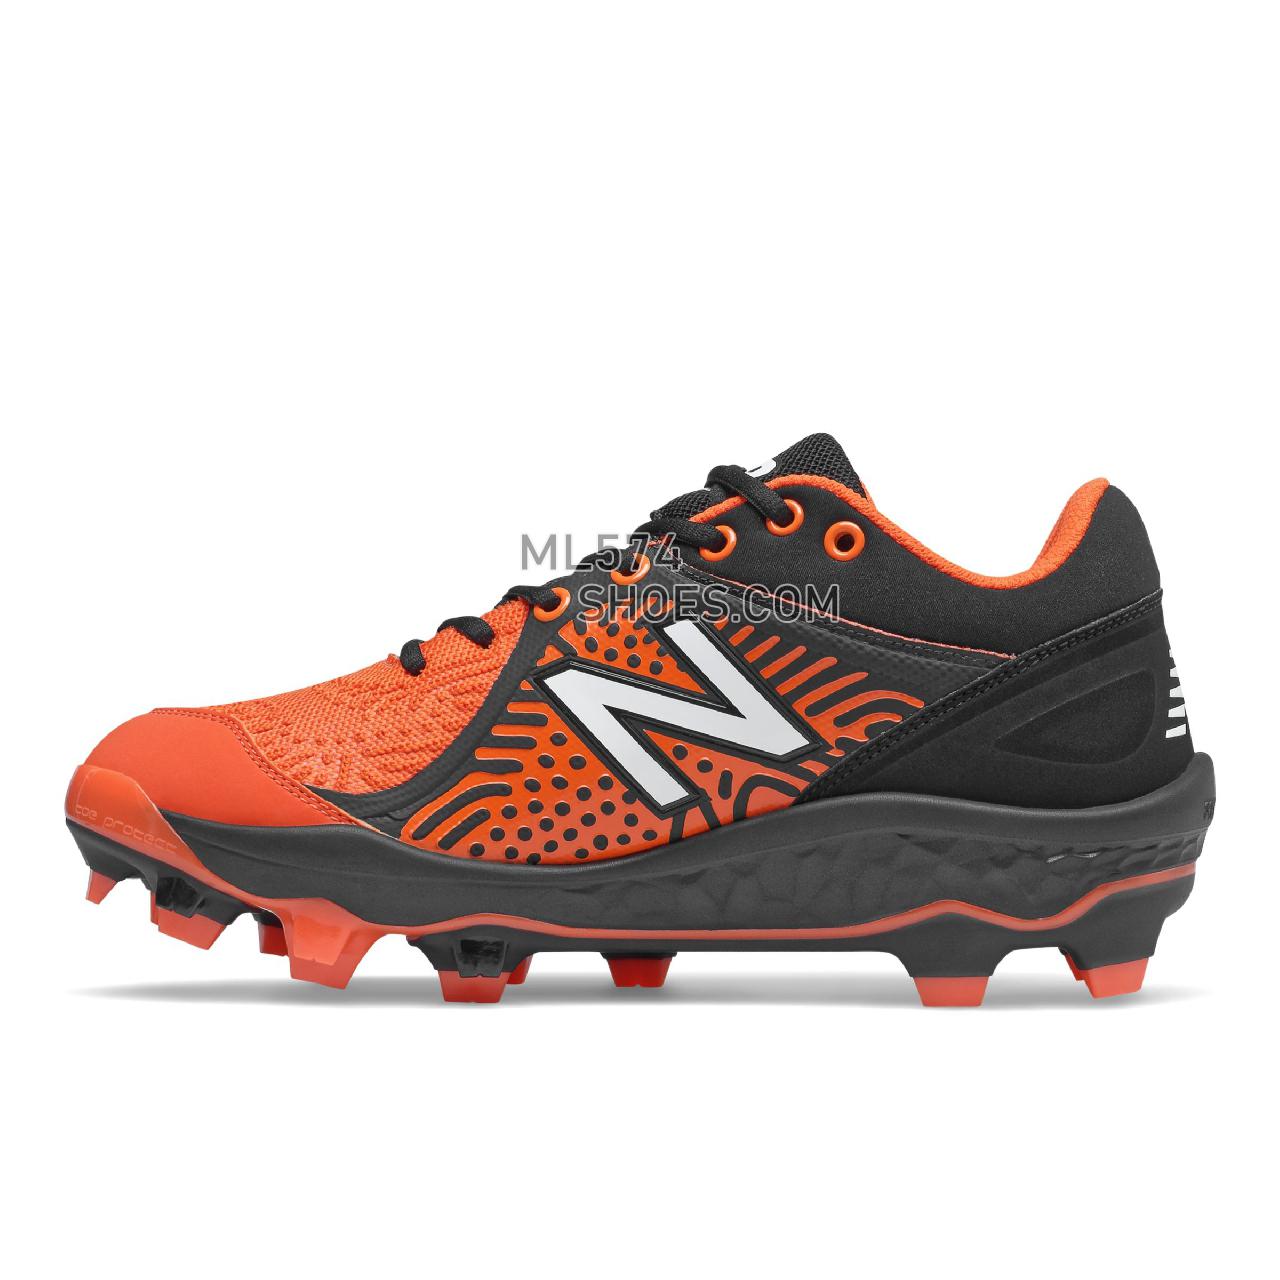 New Balance Fresh Foam 3000 v5 Molded - Men's Mid-Cut Baseball Cleats - Orange with Black - PL3000T5